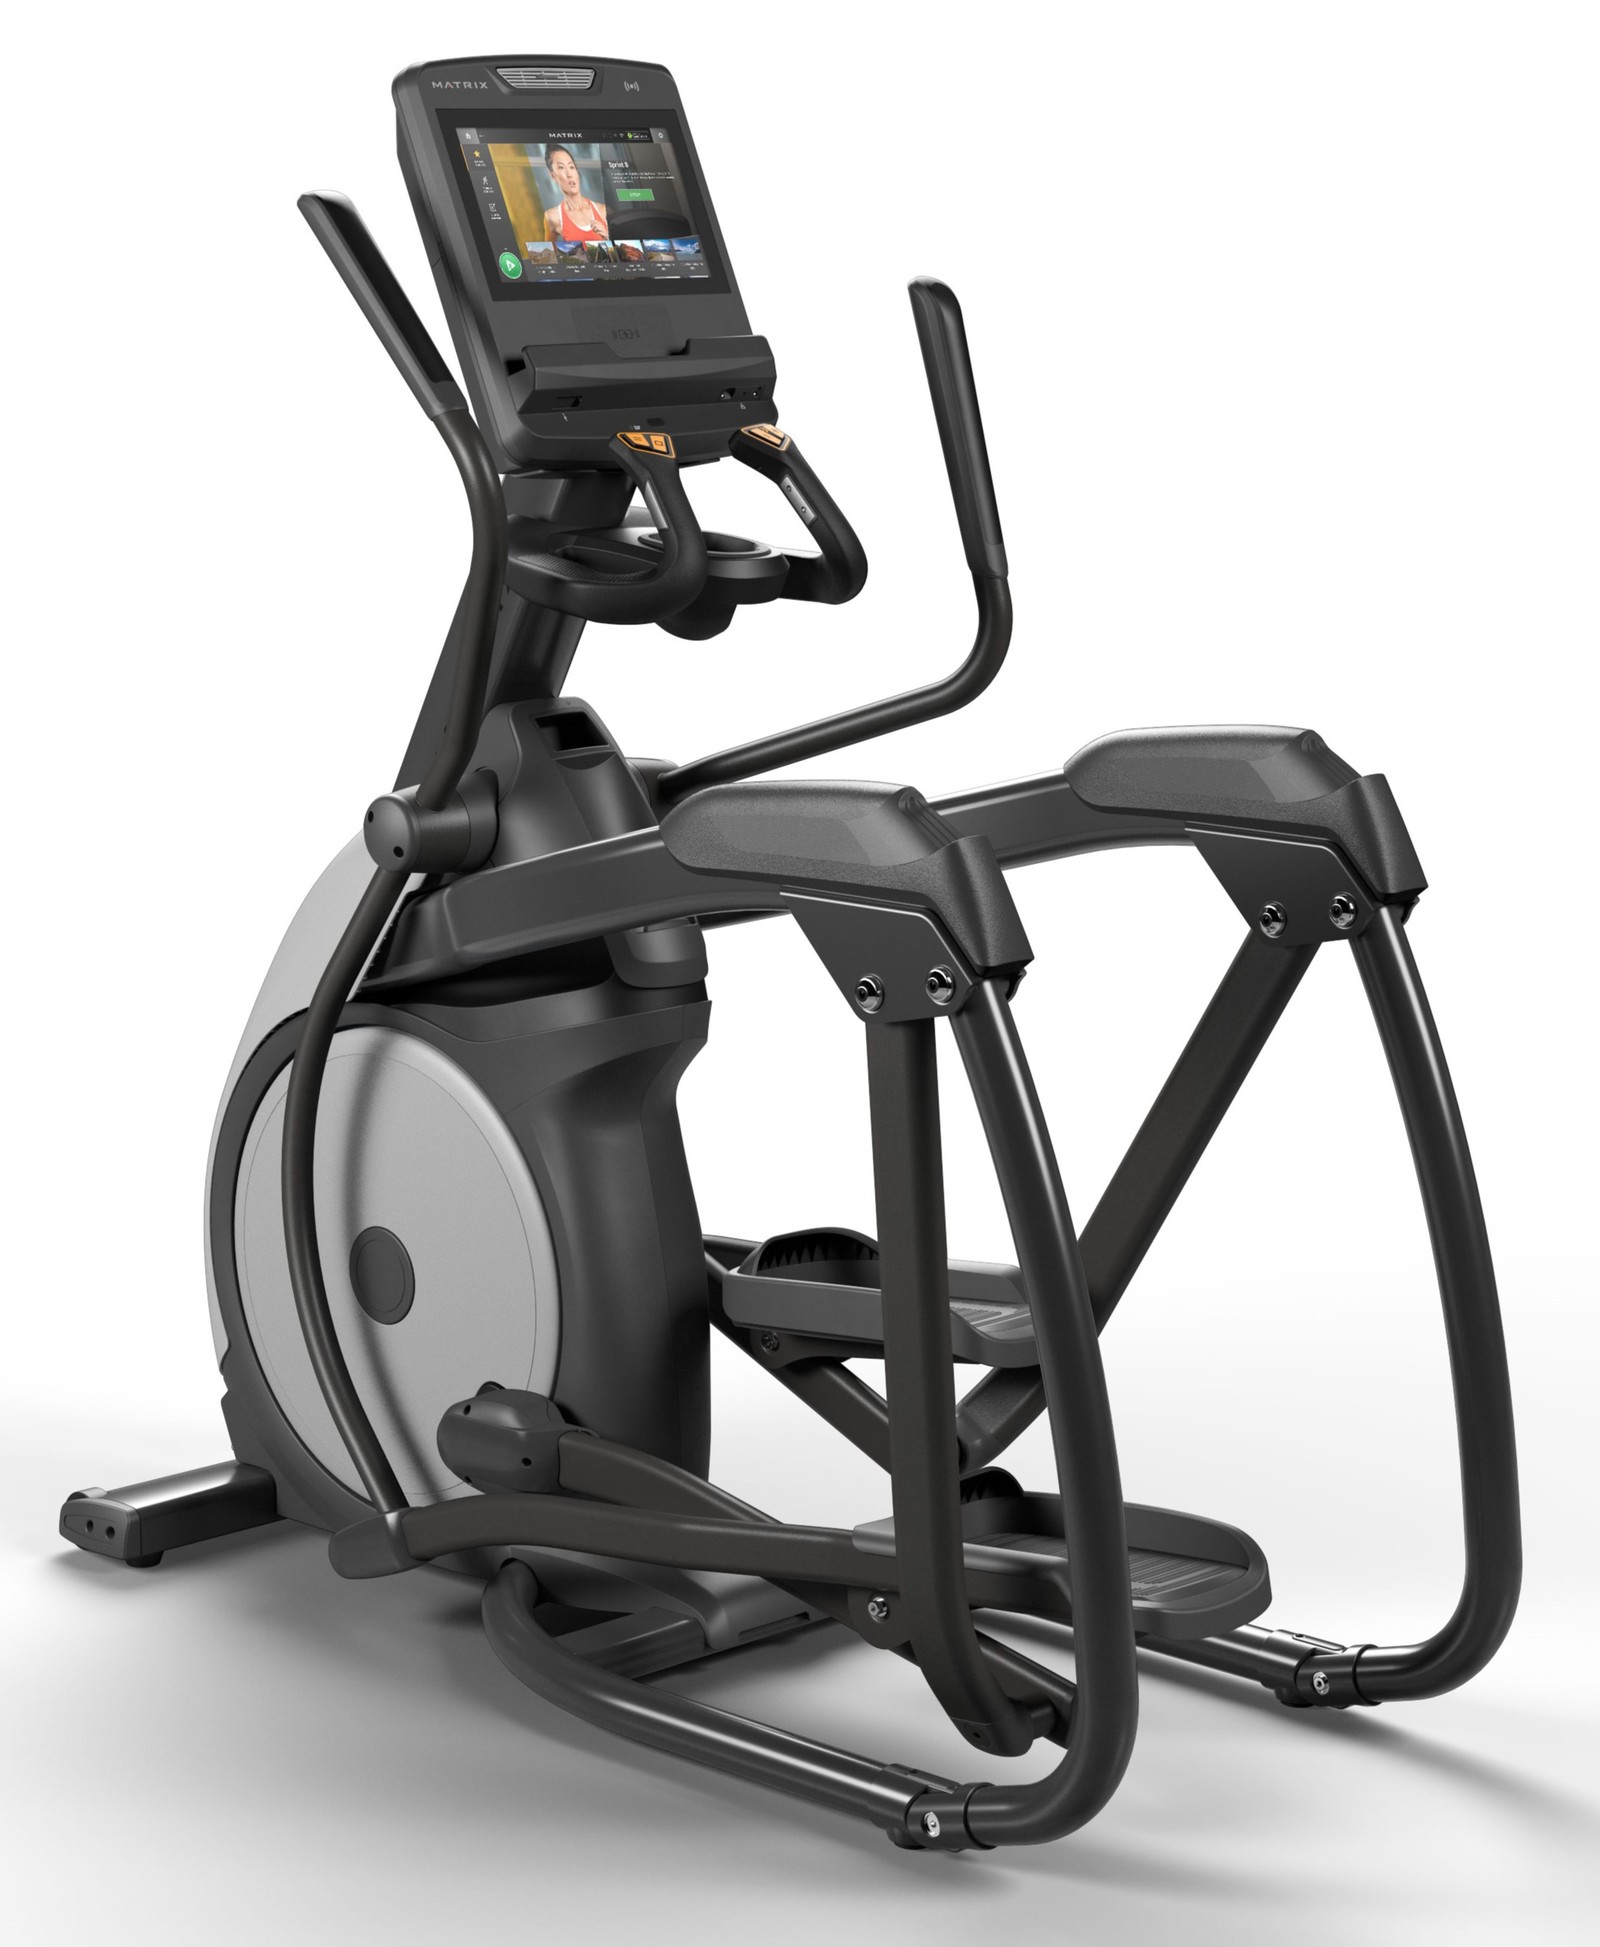 Эллиптический тренажер True Fitness Spectrum (консоль Envision 9) preview 2